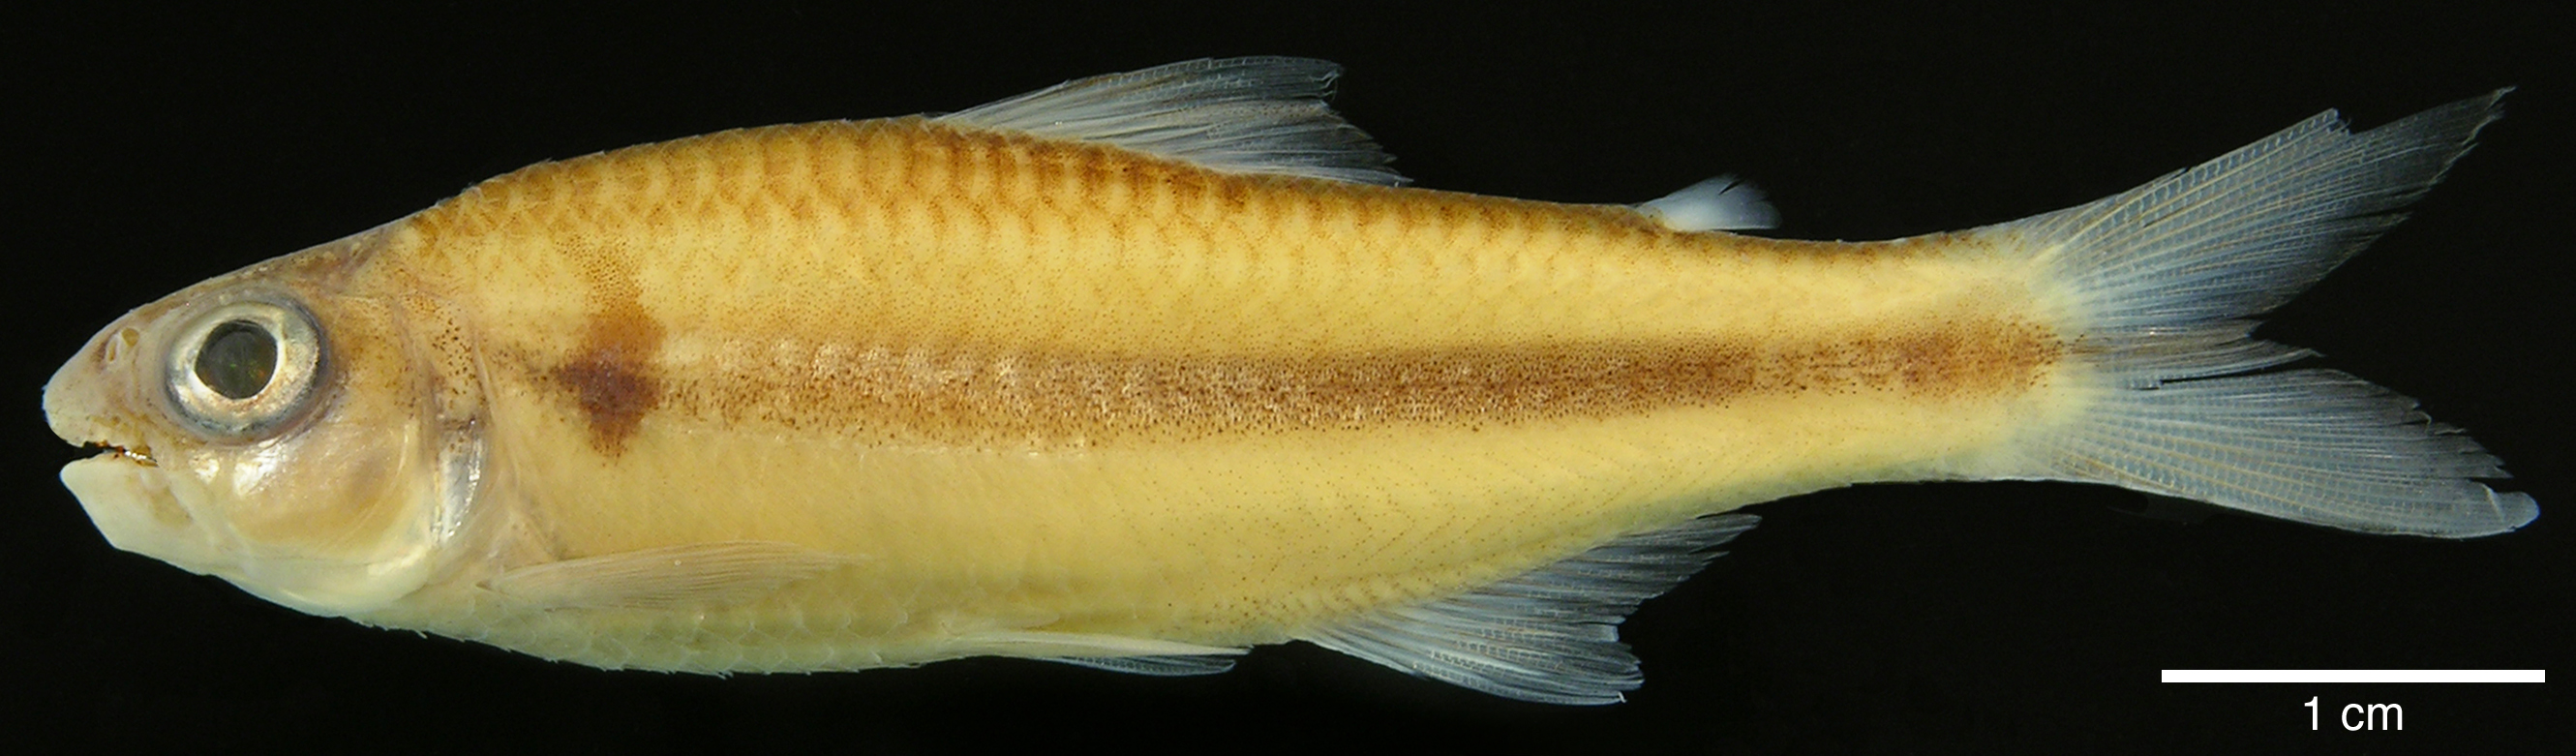 Paratype of <em>Creagrutus calai</em>, IAvH-P-10563_Lateral, 52.5 mm SL (scale bar = 1 cm). Photograph by M. H. Sabaj Pérez